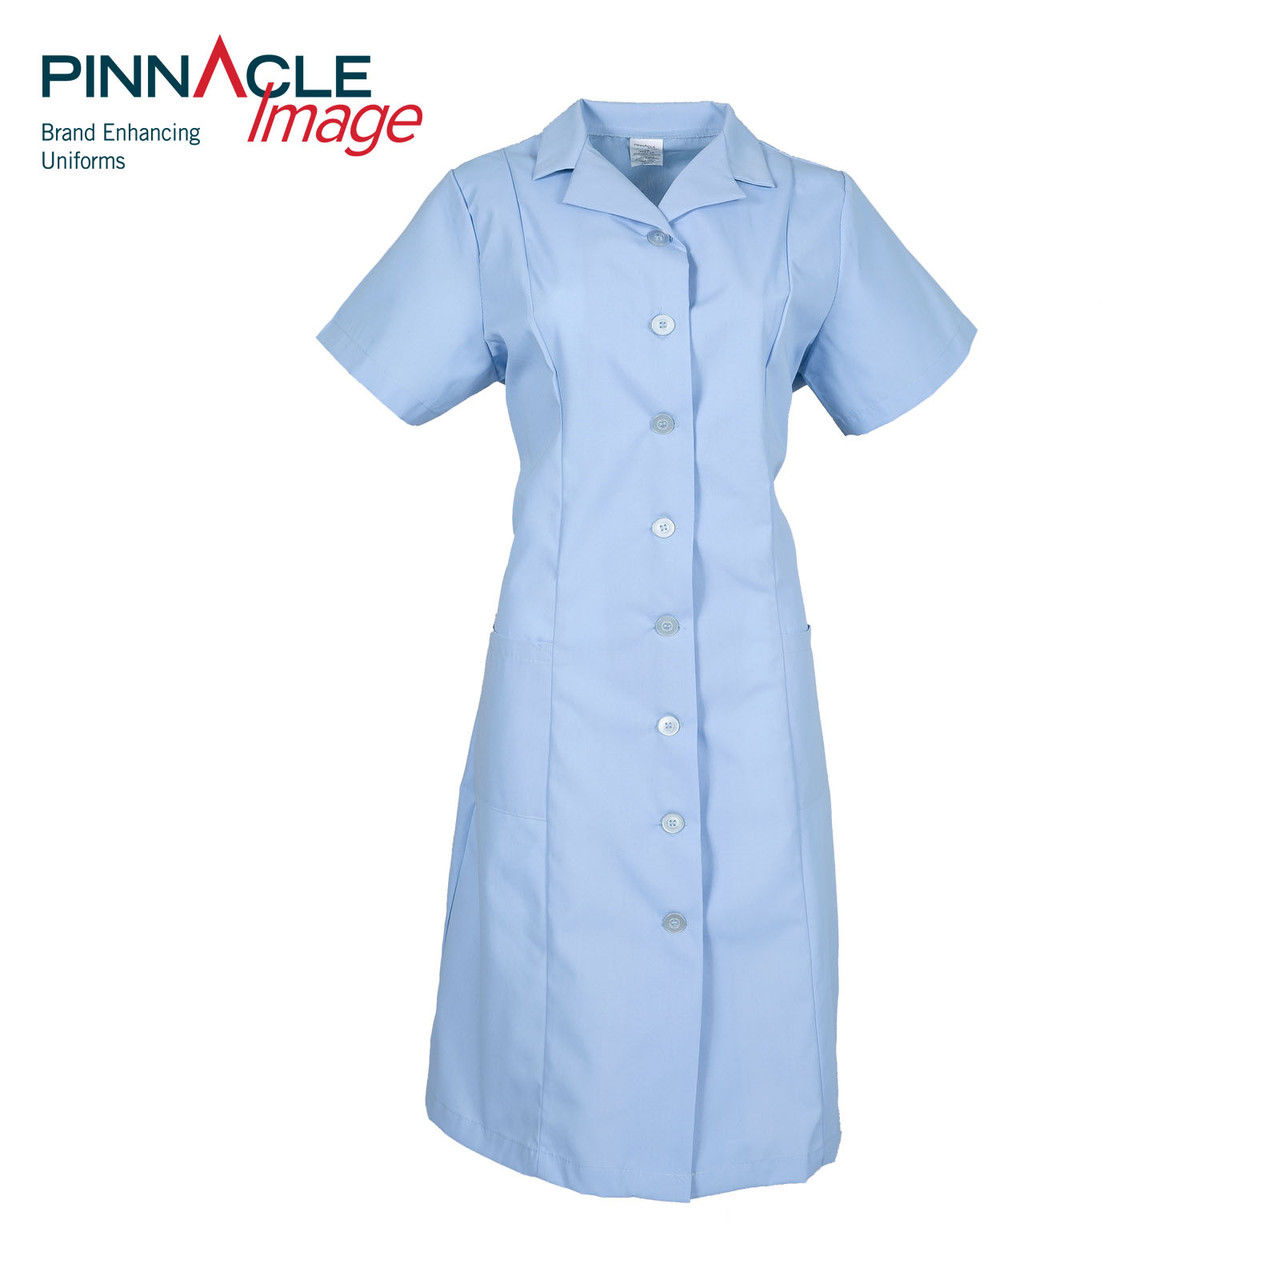 Is the style of this blue uniform dress like a Light Blue Princess Dress?